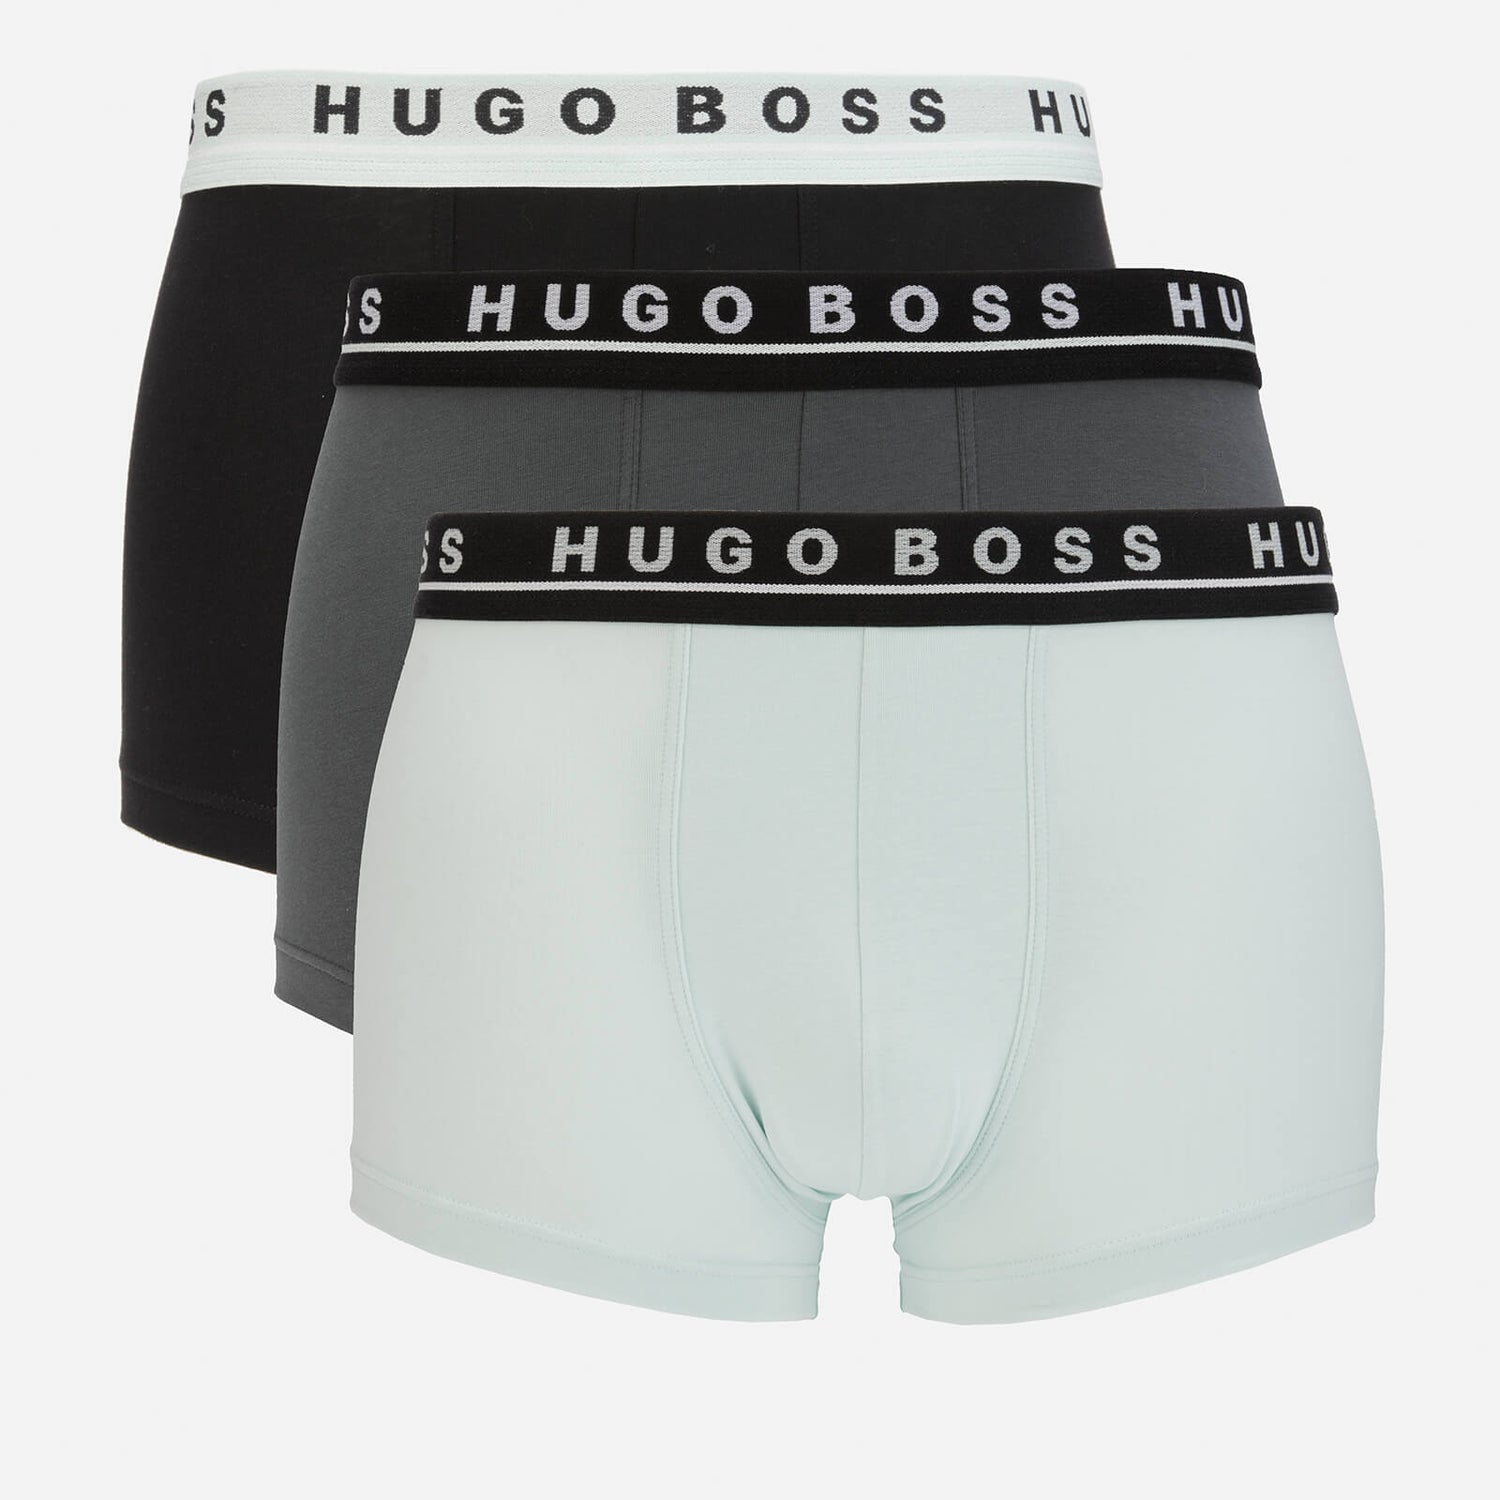 BOSS Bodywear Men's 3 Pack Trunk Boxer Shorts - Grey/Black/Mint